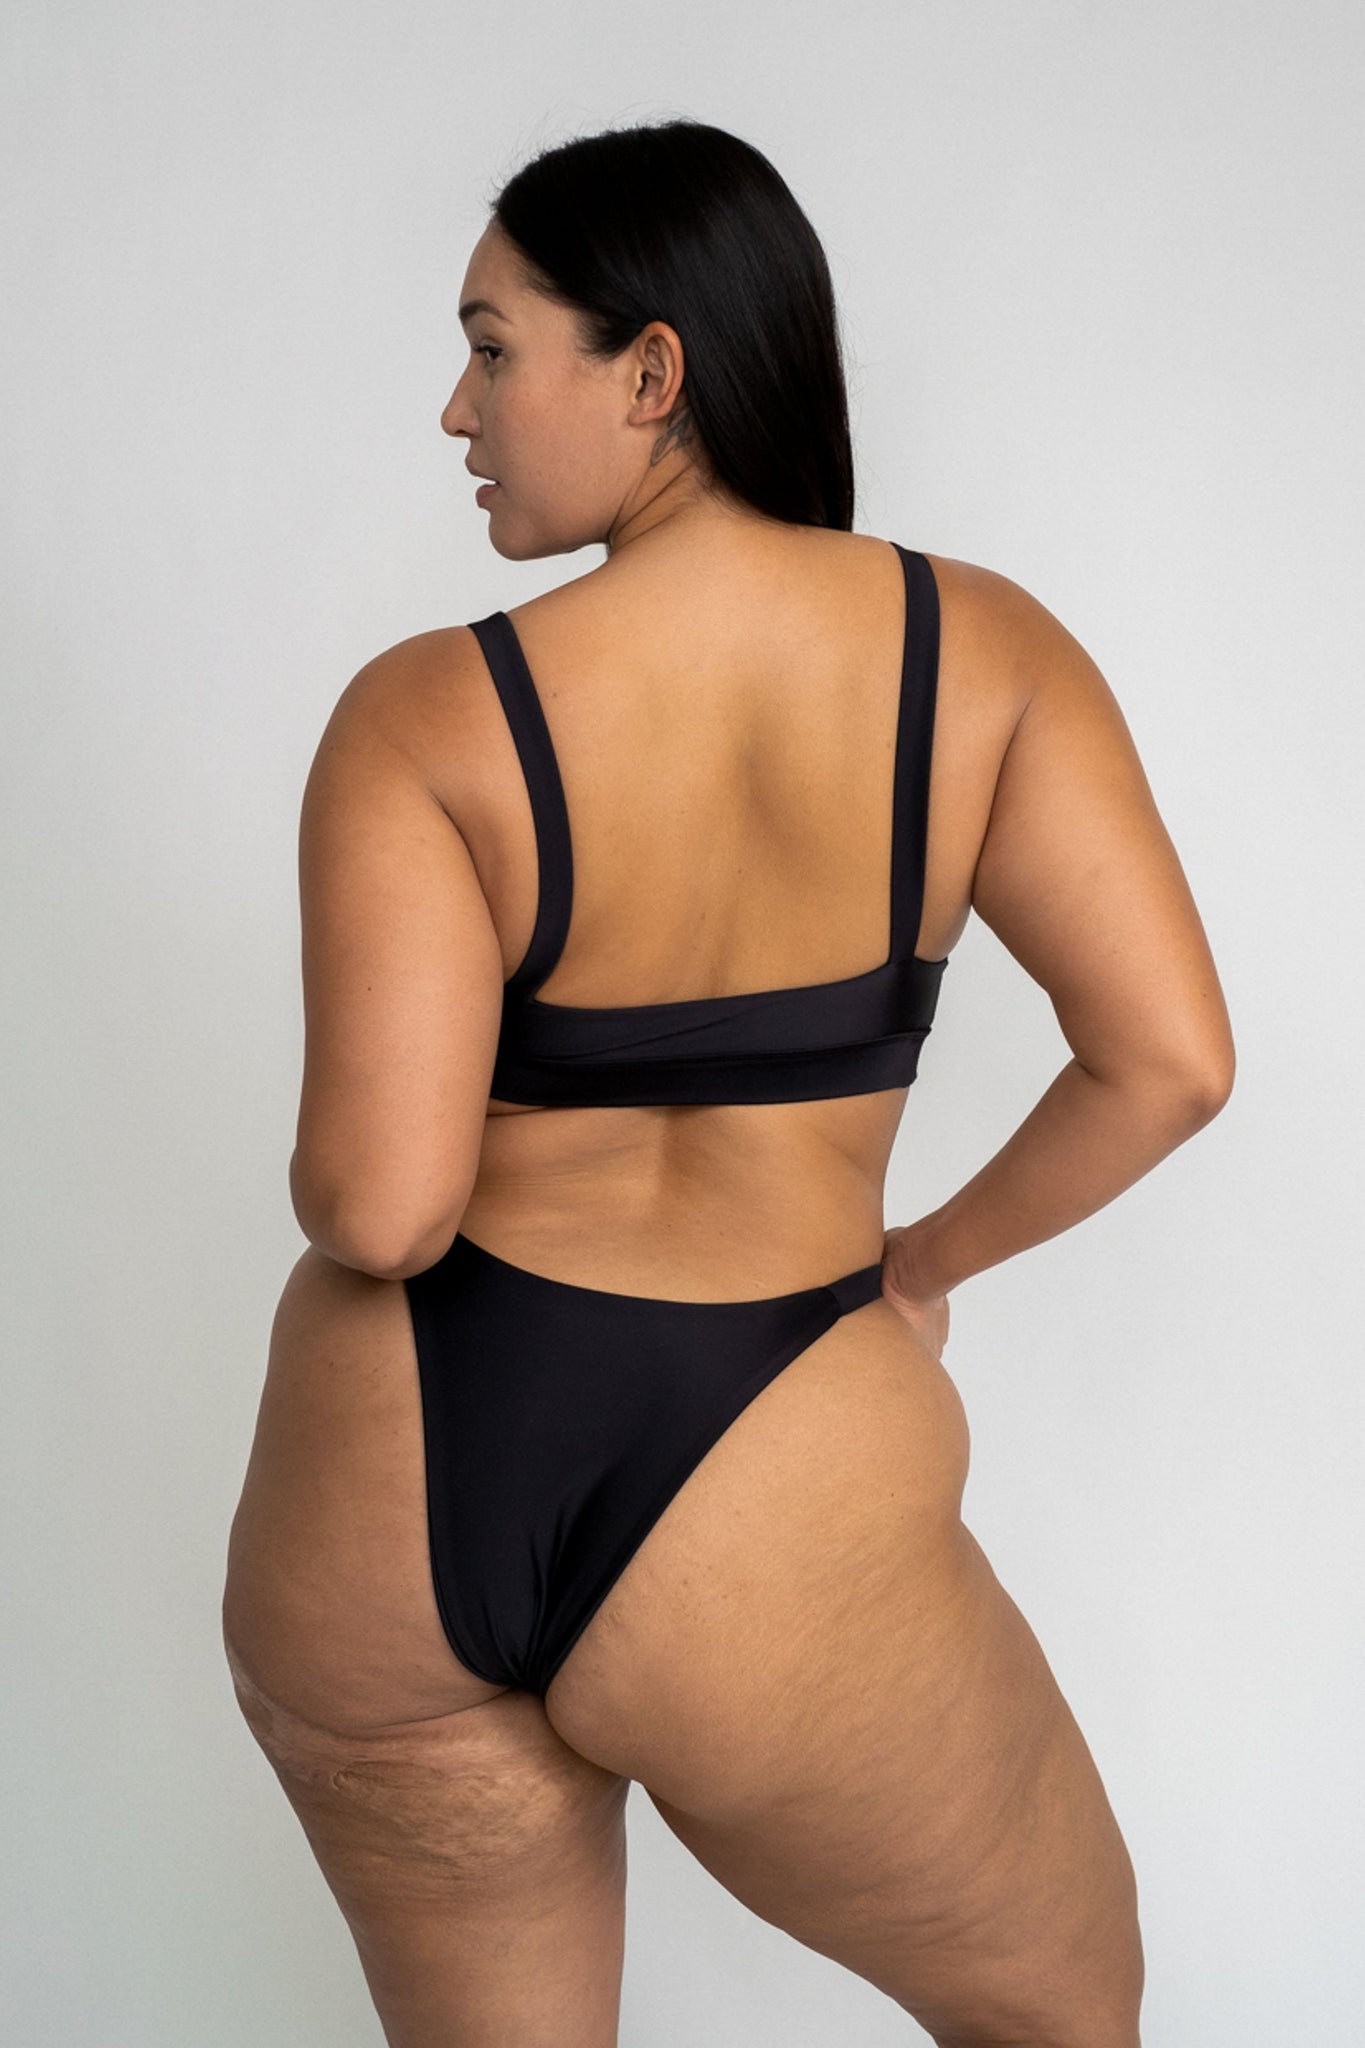 The back of a woman wearing high cut cheeky black bikini bottoms and a matching black bikini top.